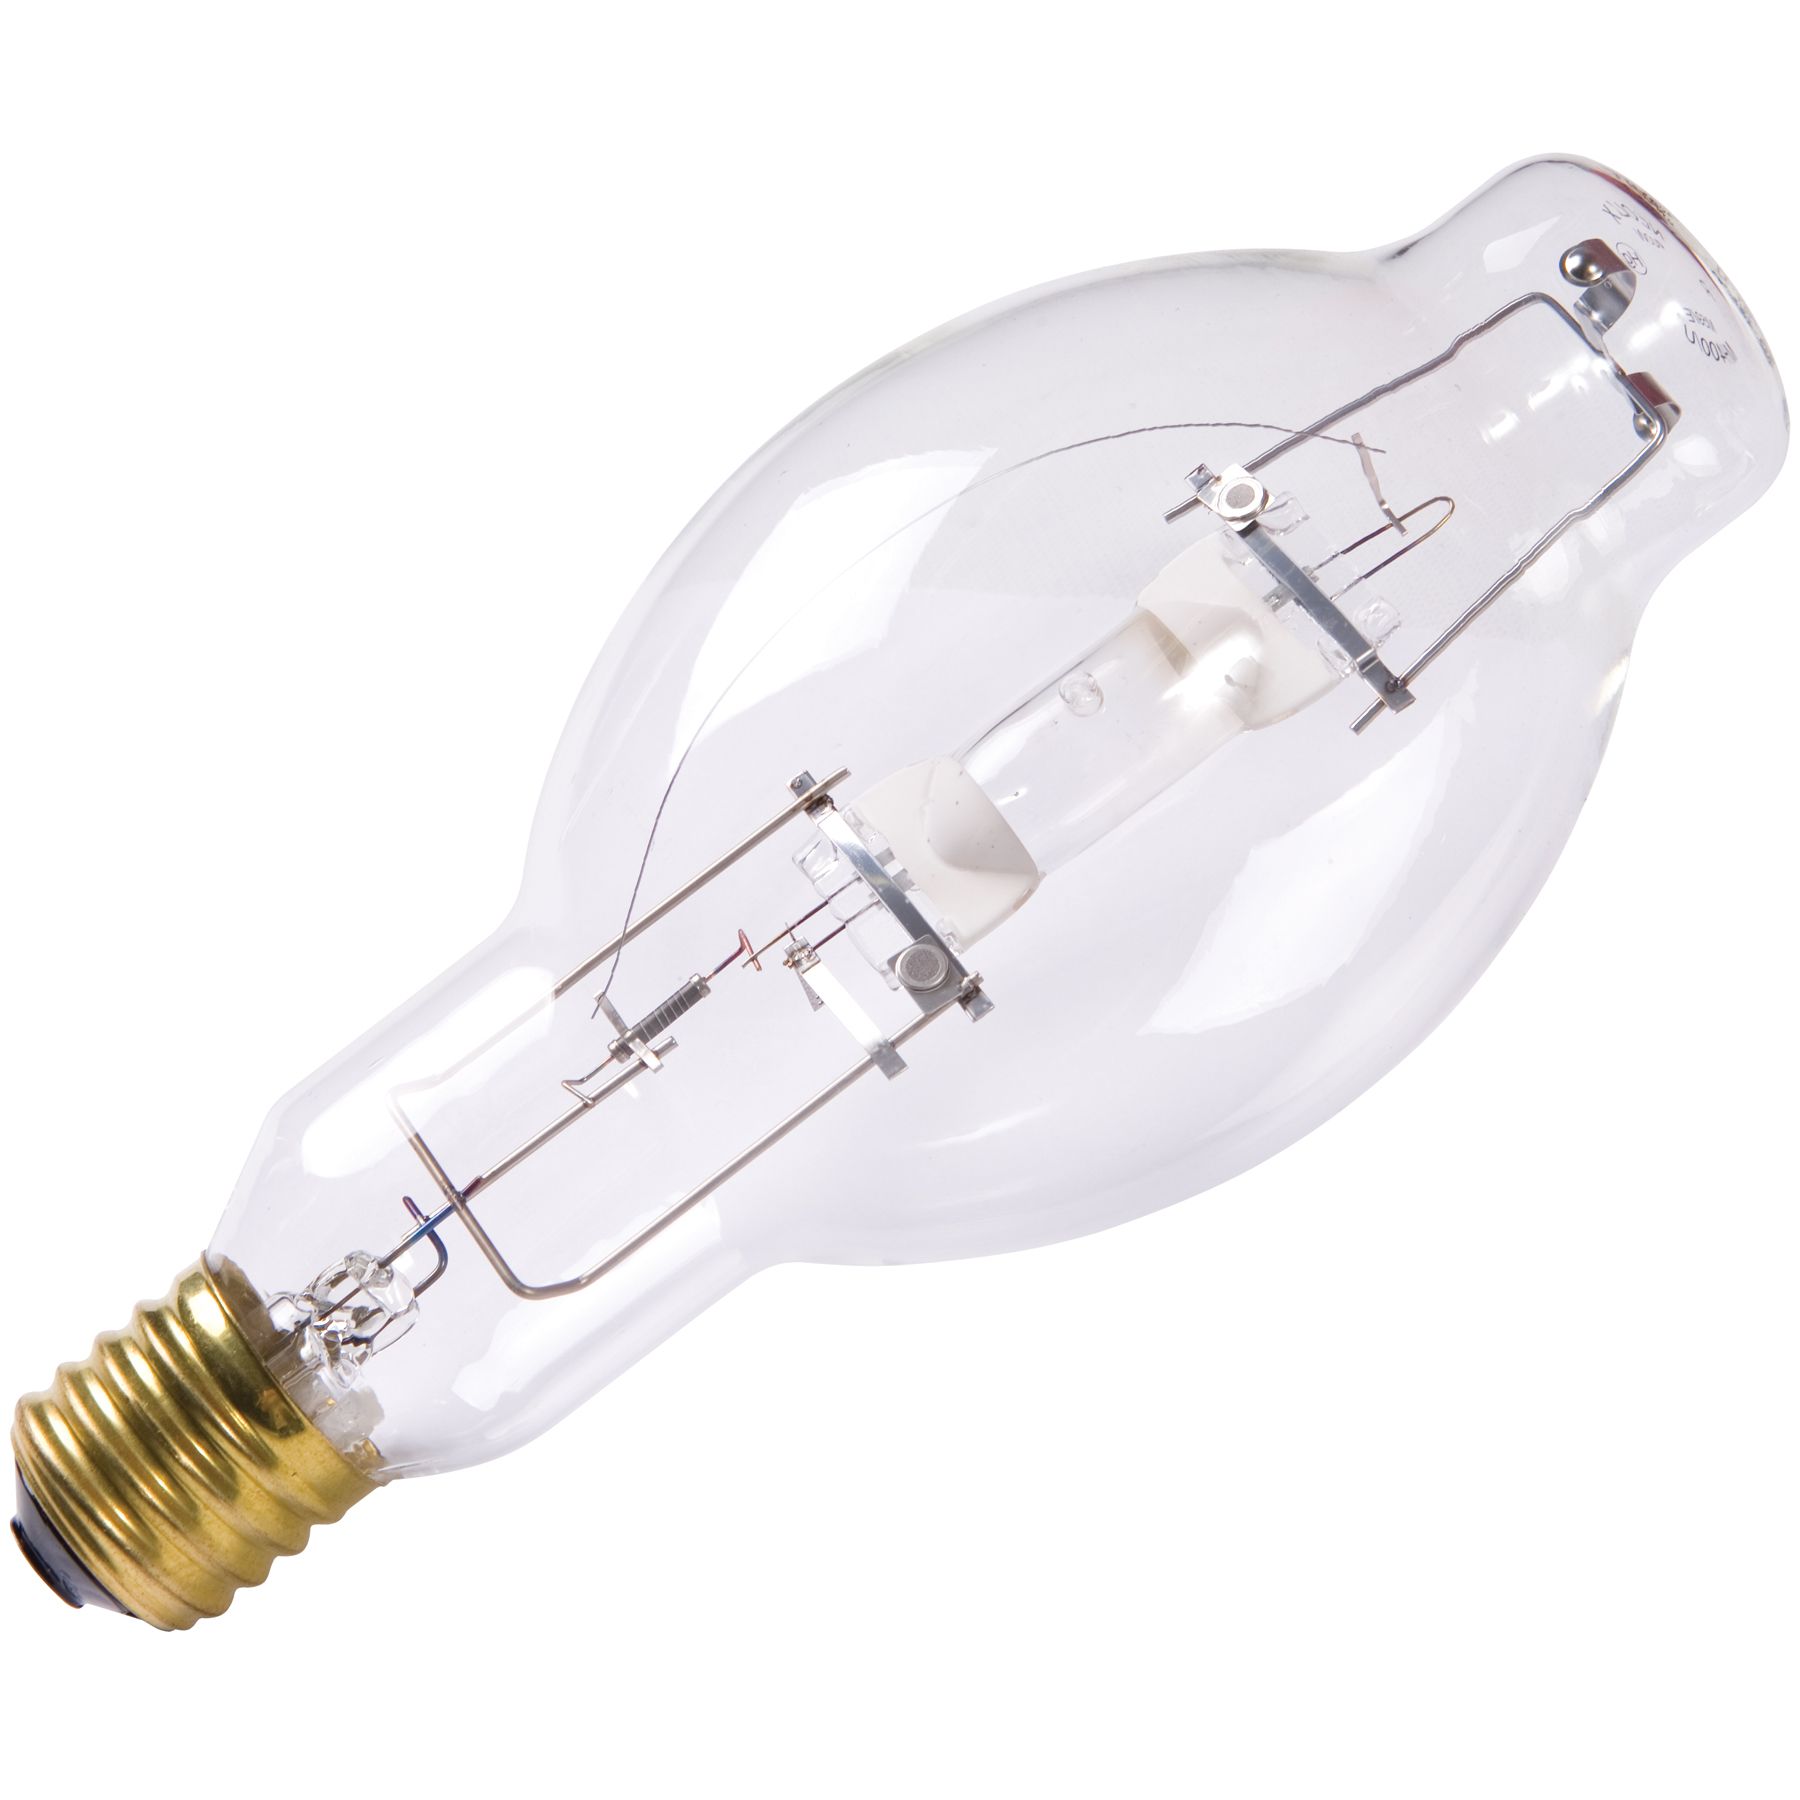 SLI Lighting Metal Halide Bulb 100 watt lot of 10 